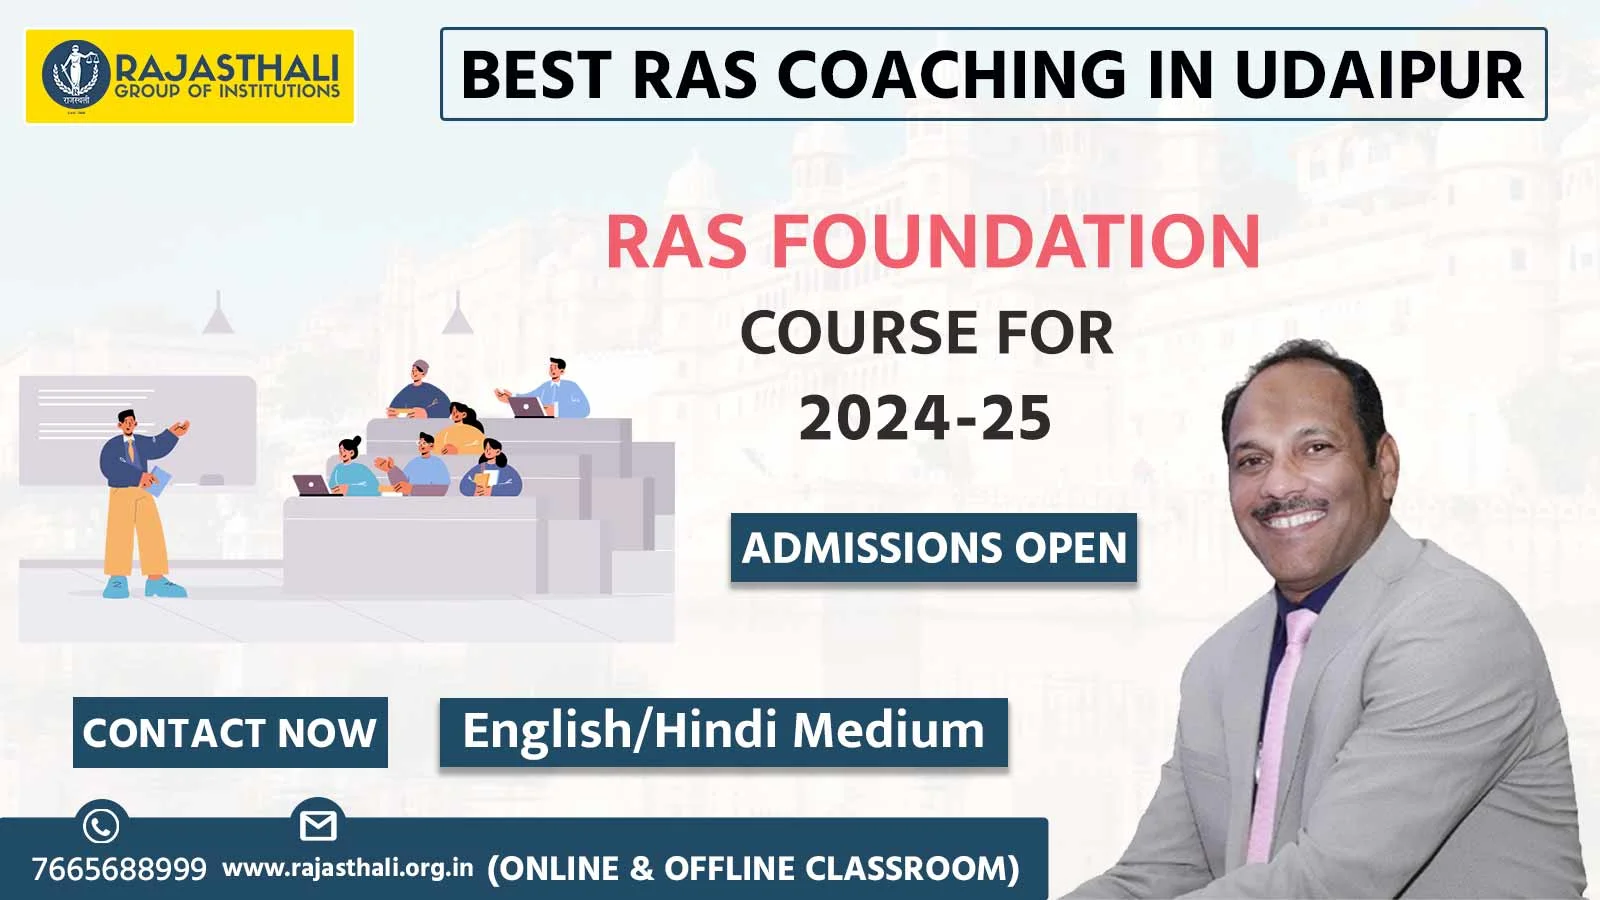 Best RAS Coaching In Udaipur